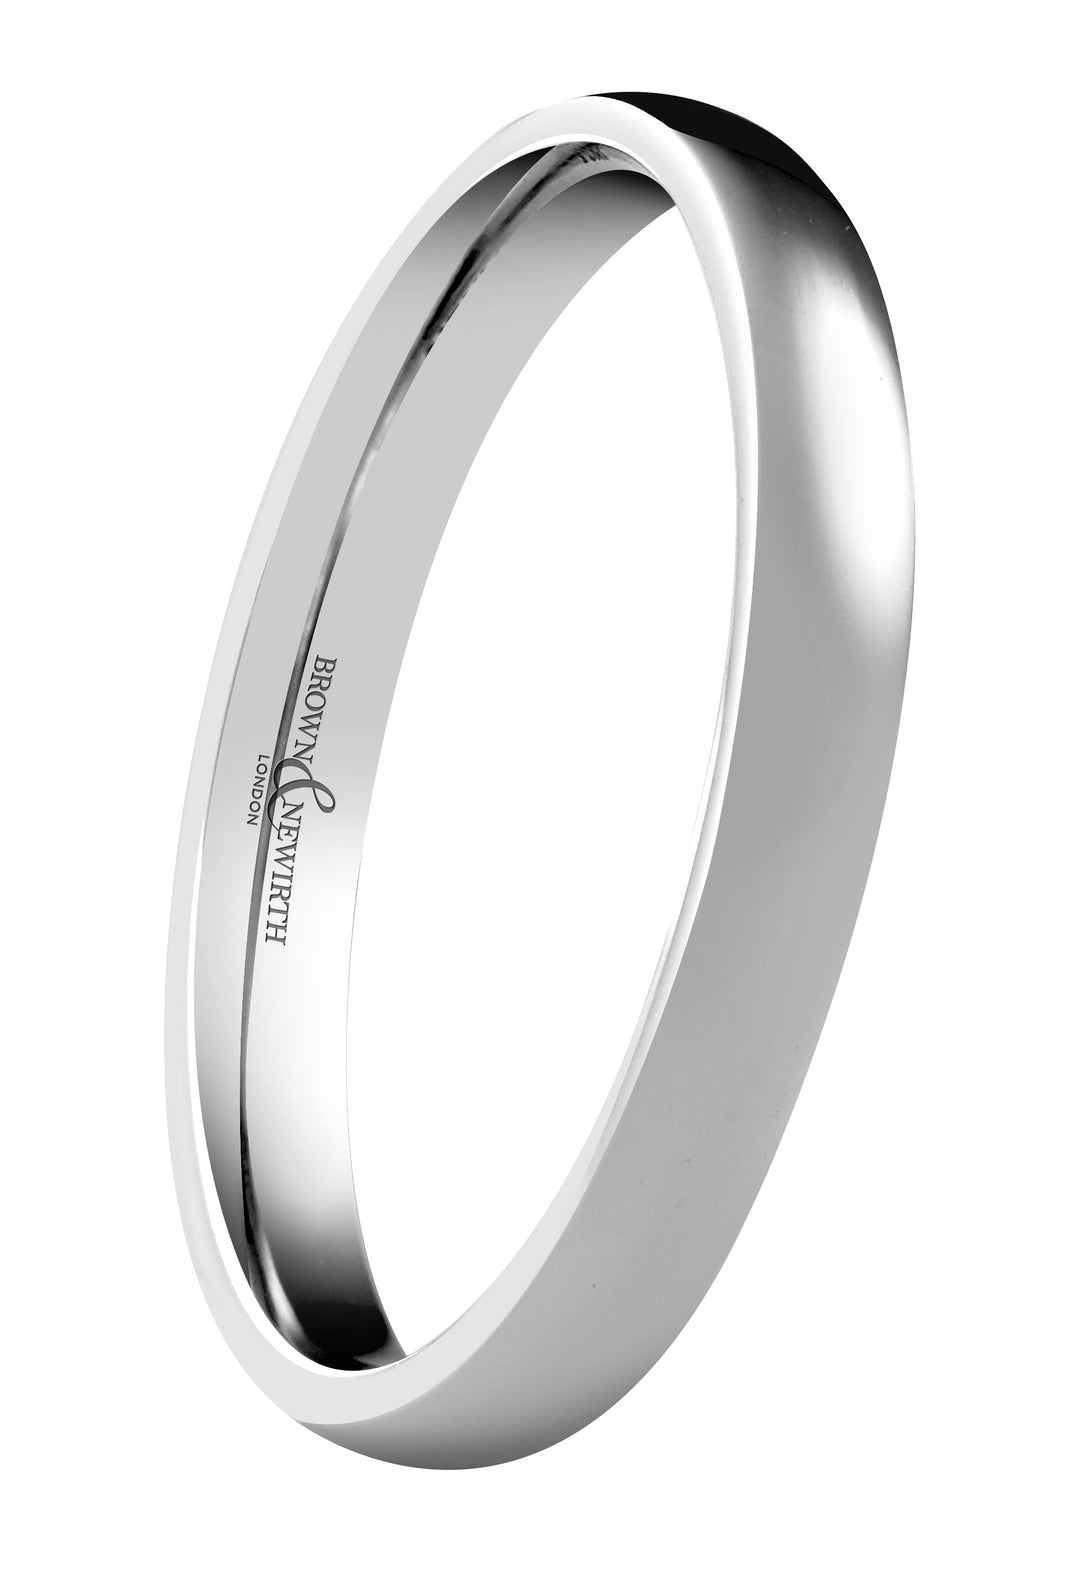 B&N Simplicity Wedding Ring 3mm